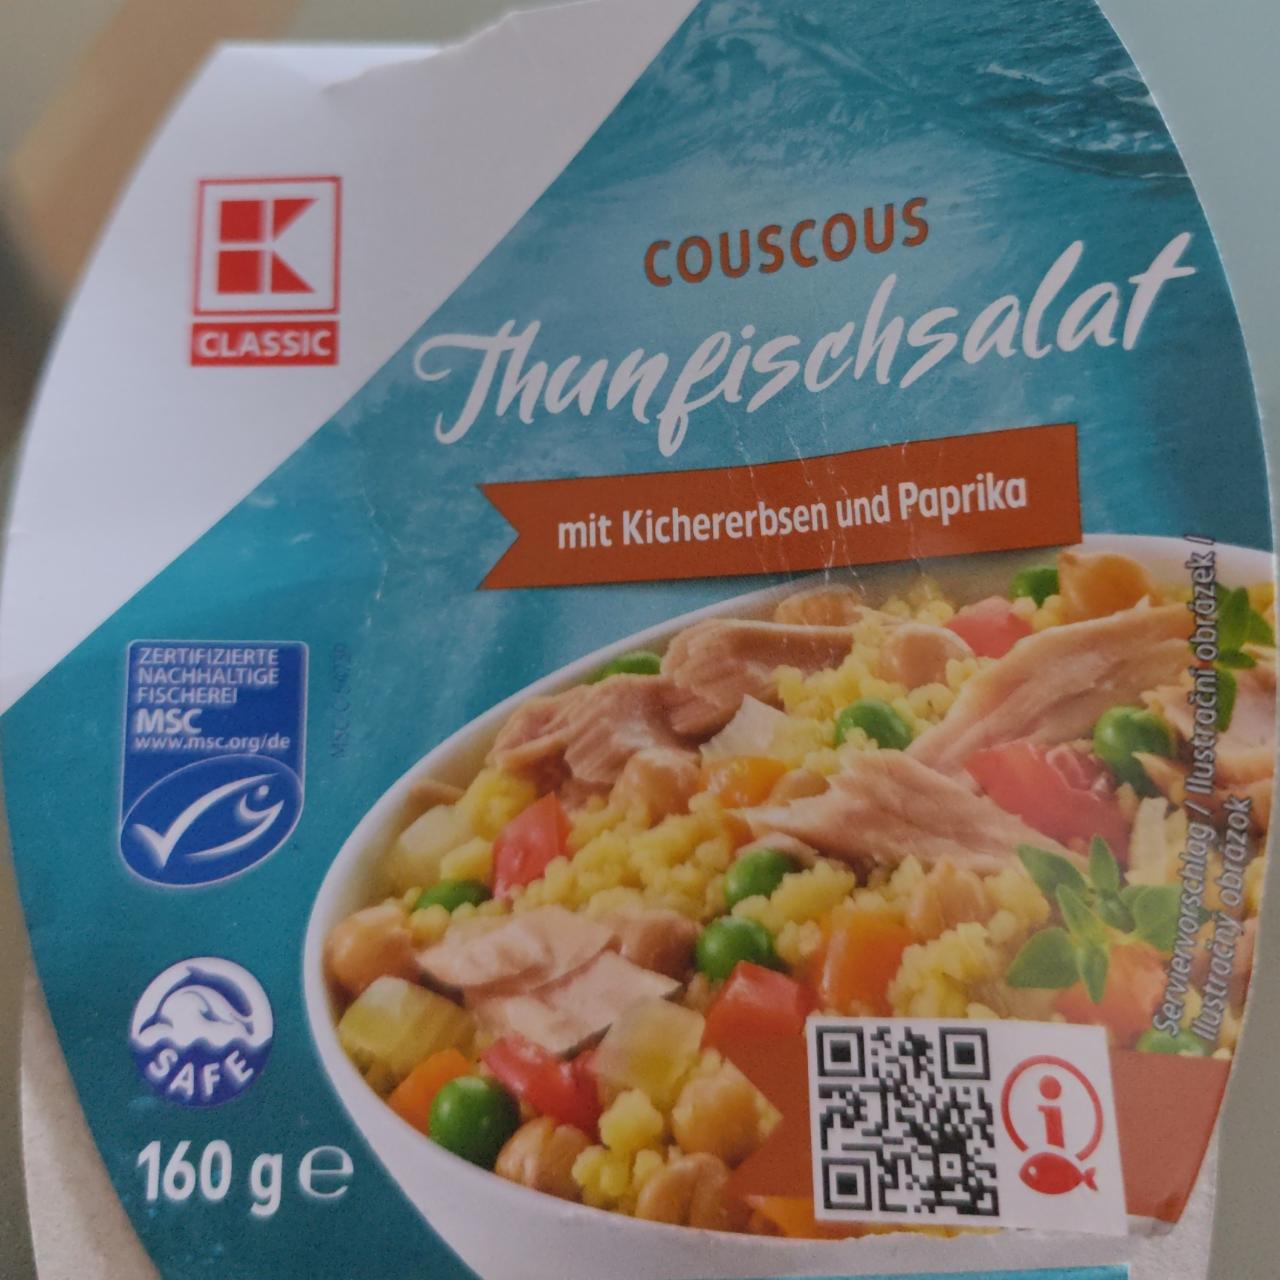 Fotografie - Couscous Thunfischsalat mit Kichererbsen und Paprika K-classic